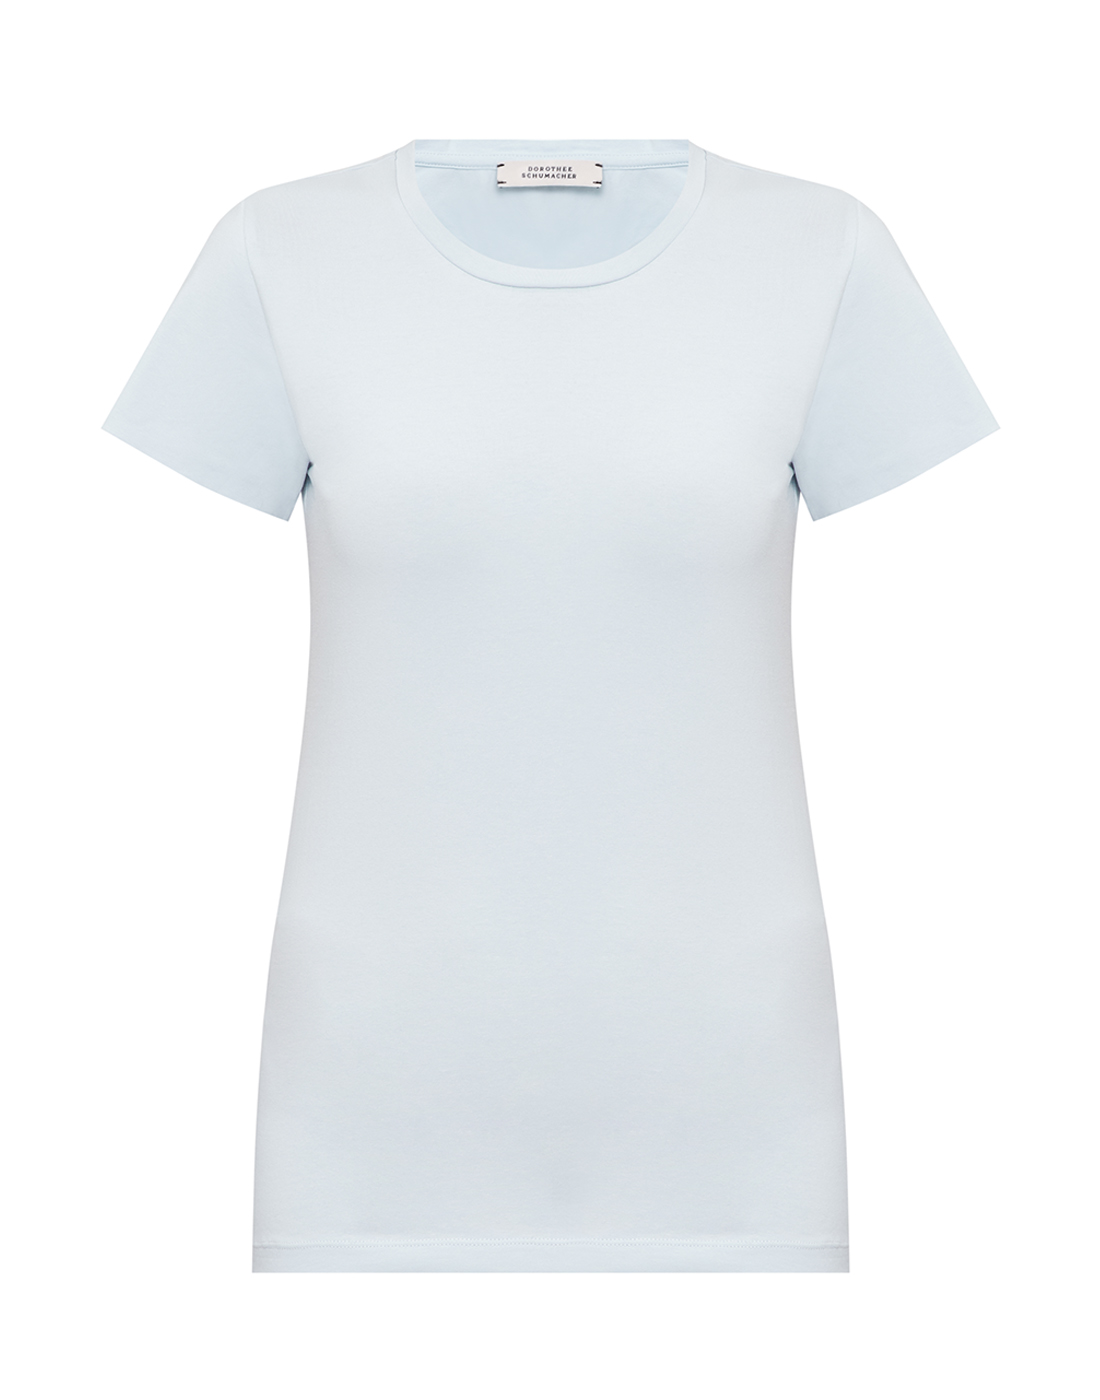 Женская голубая футболка Dorothee Schumacher S128304/805-1